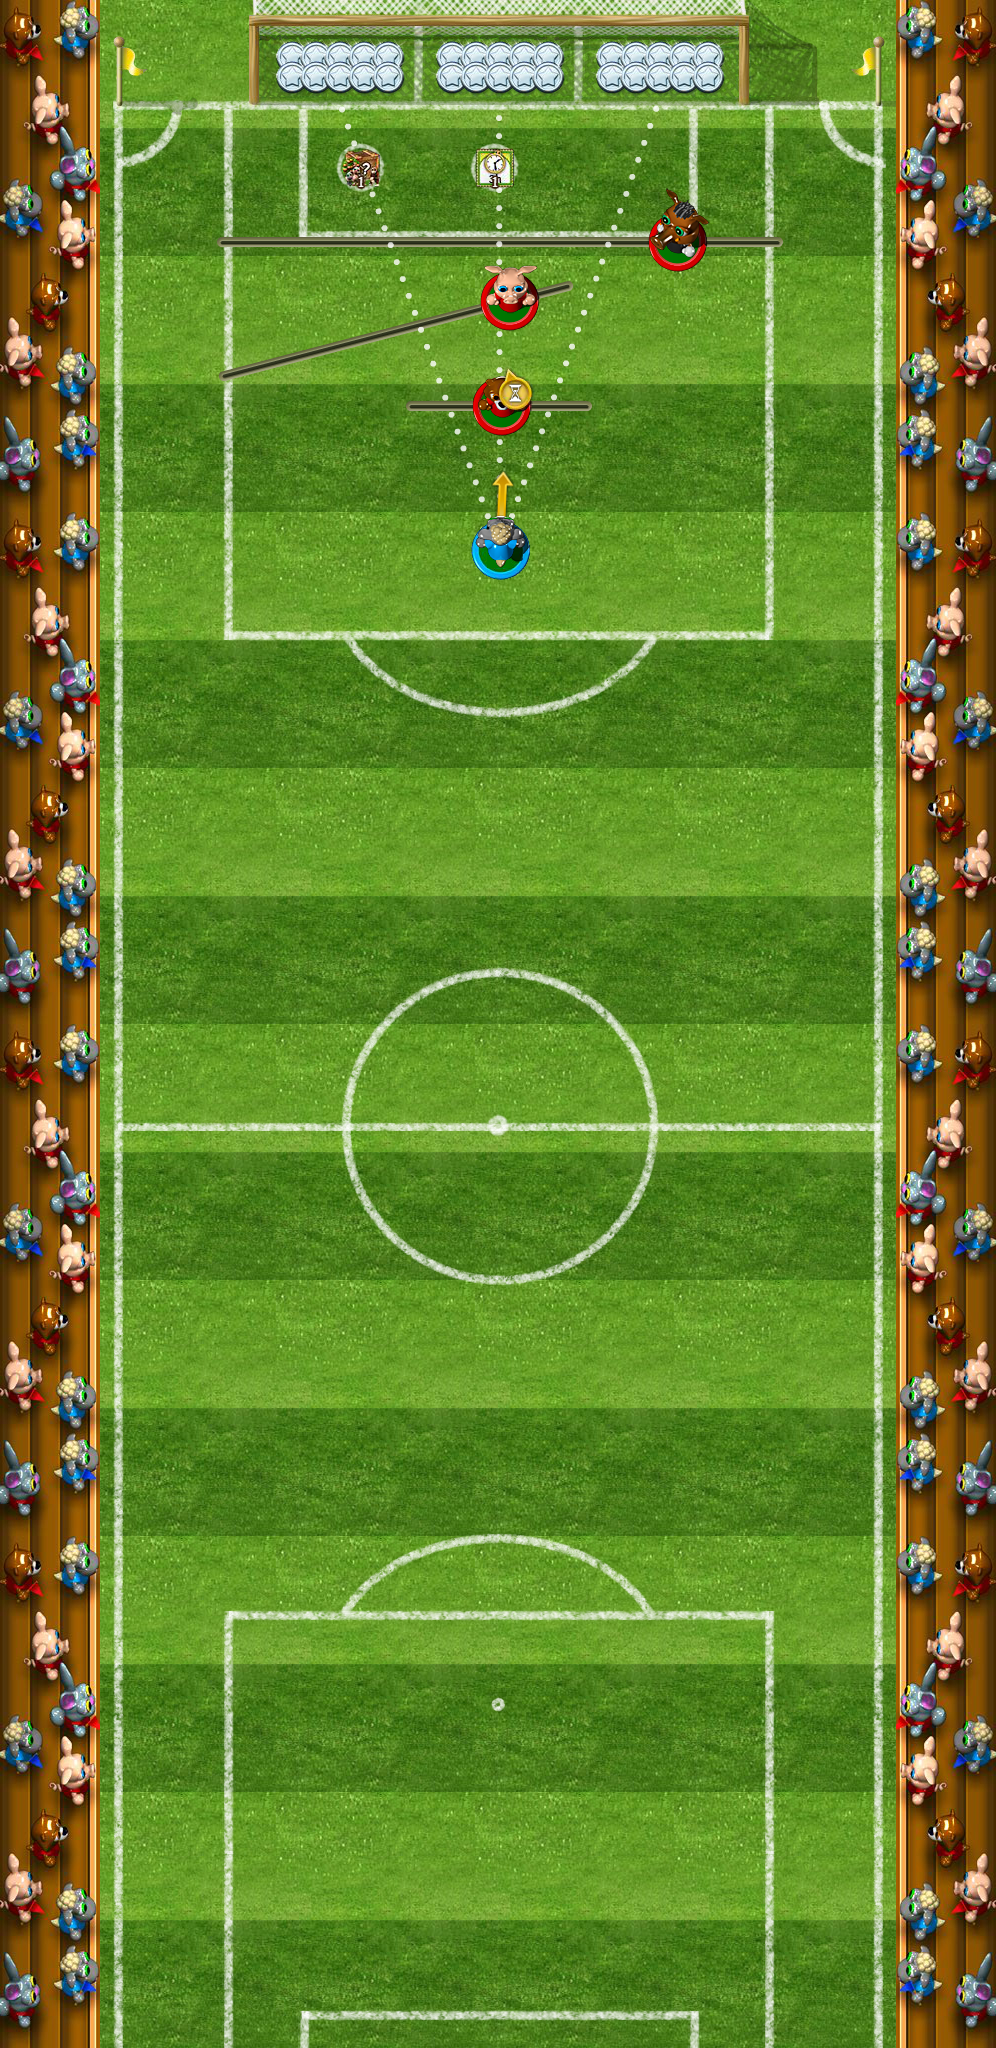 soccerjul2019_layout9.png